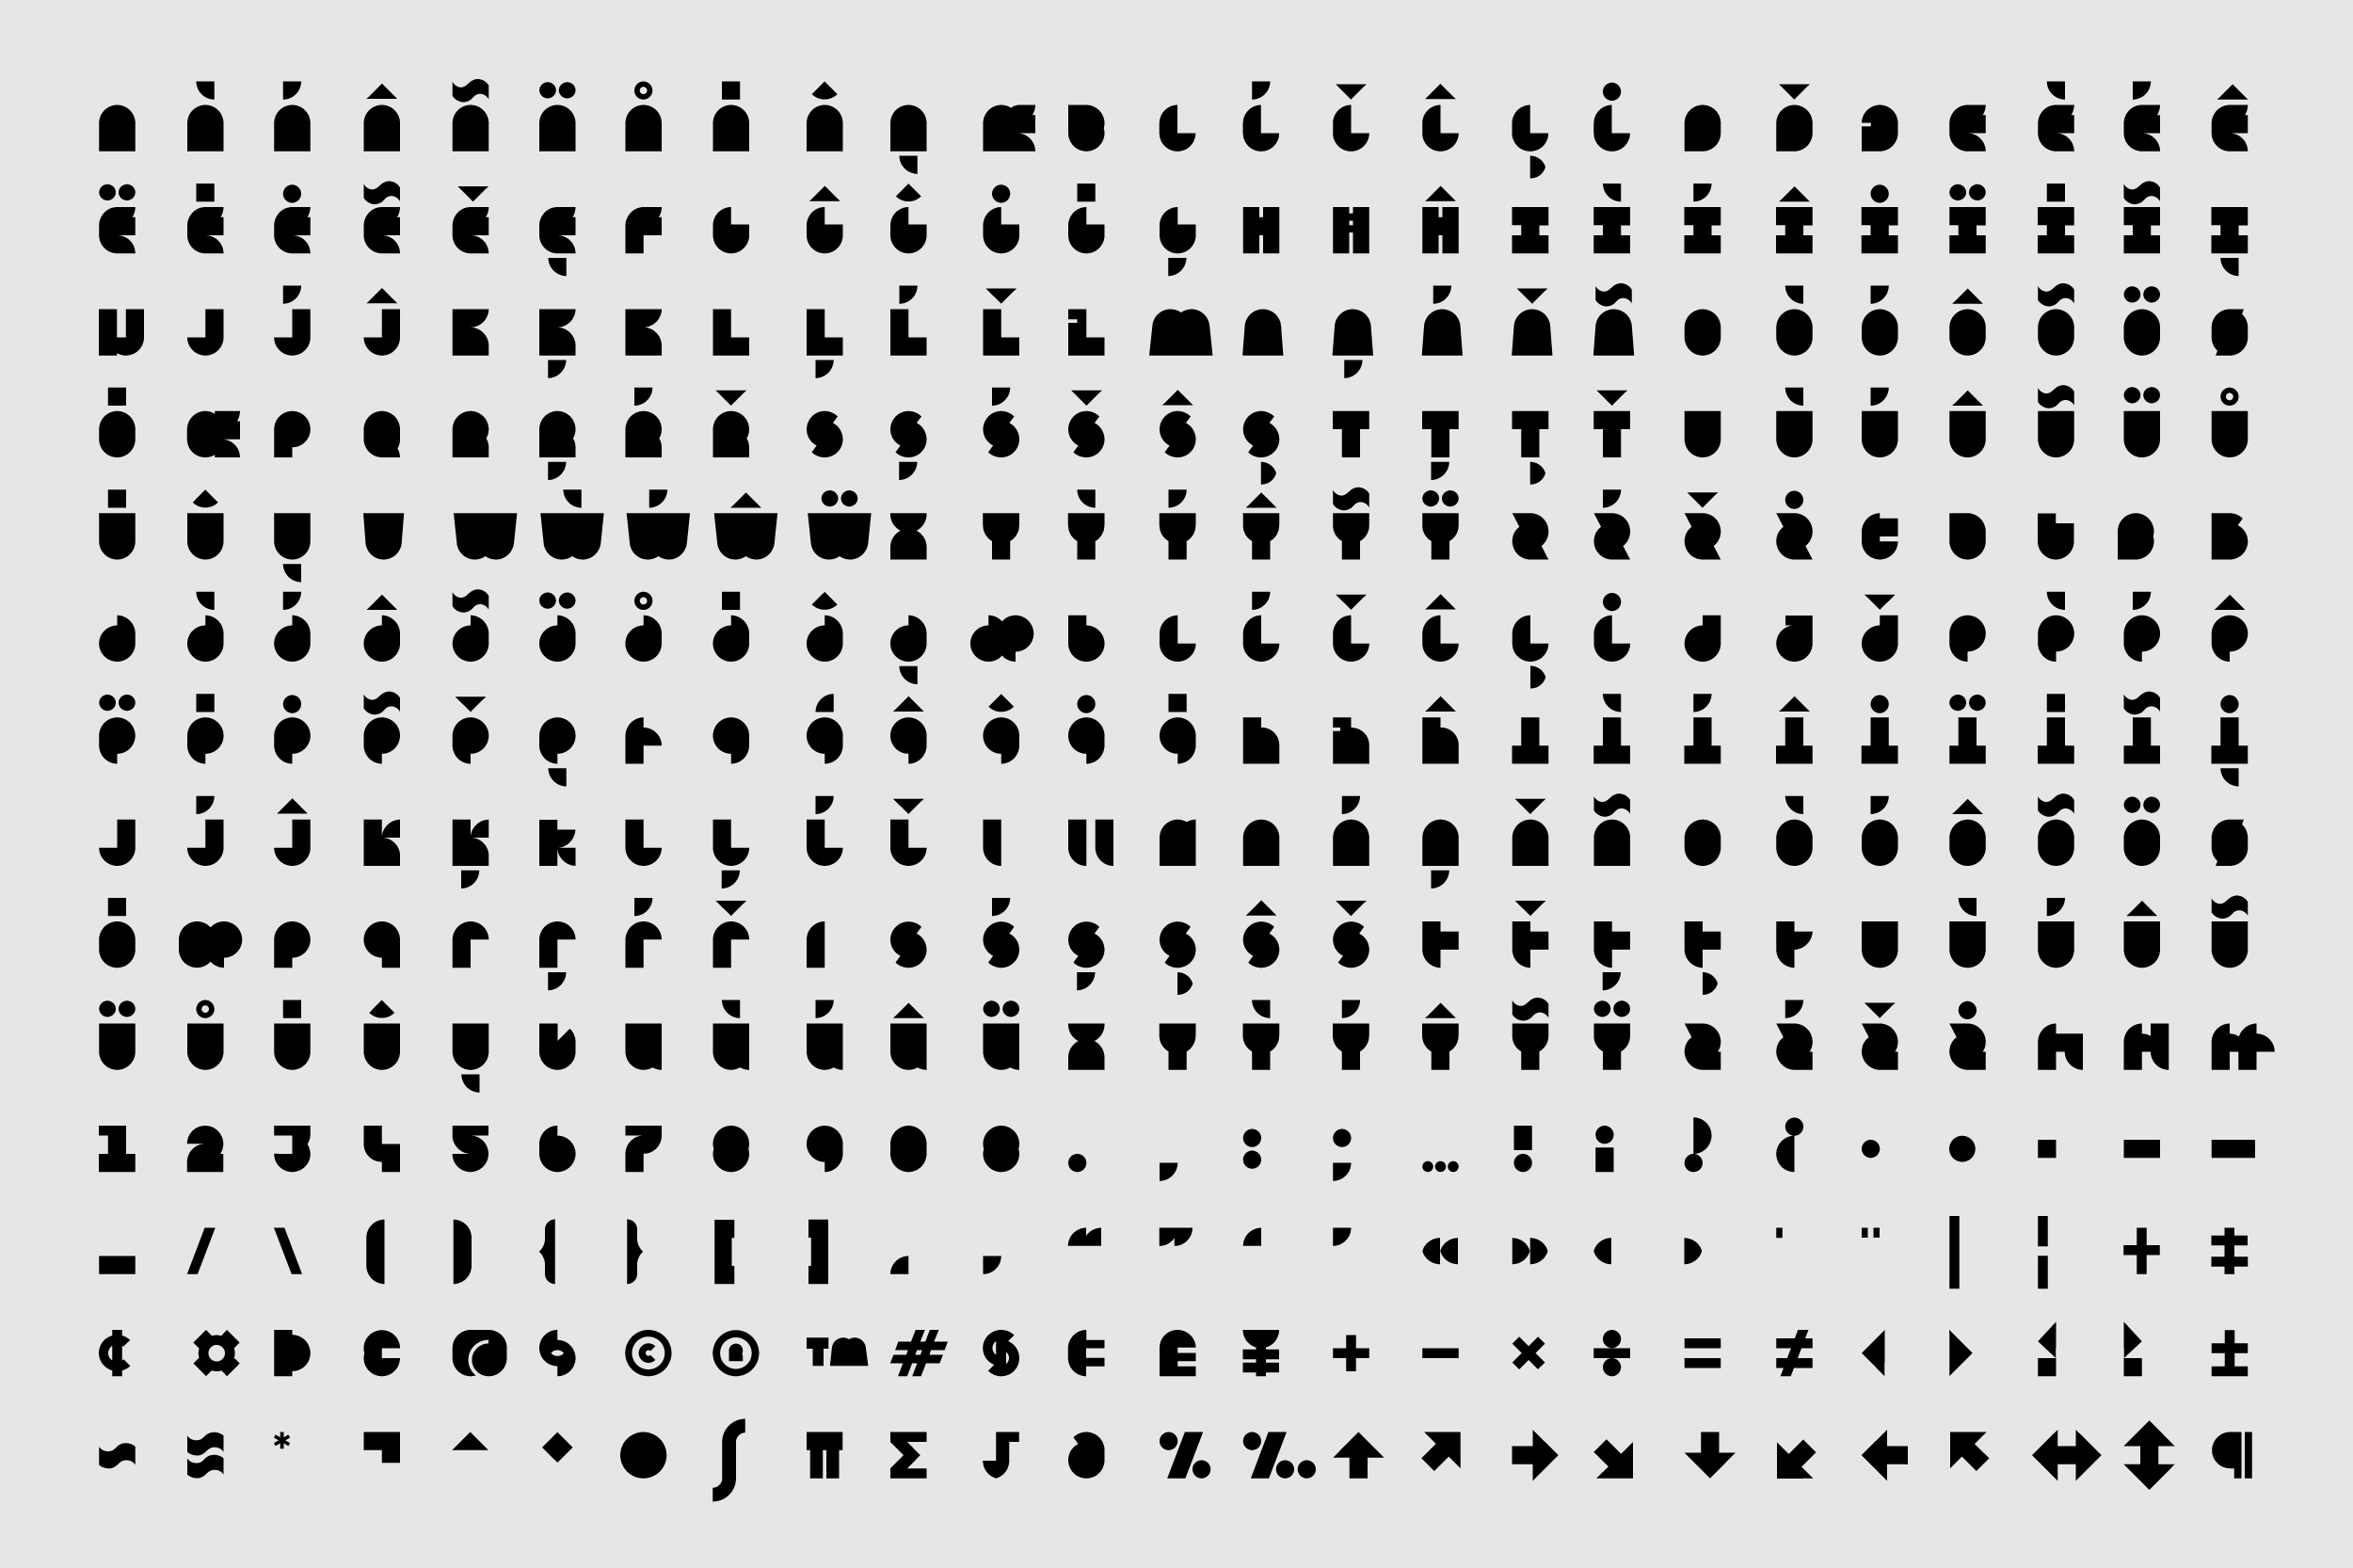 Gebr. Silvestri Typeface – GS_Valerie